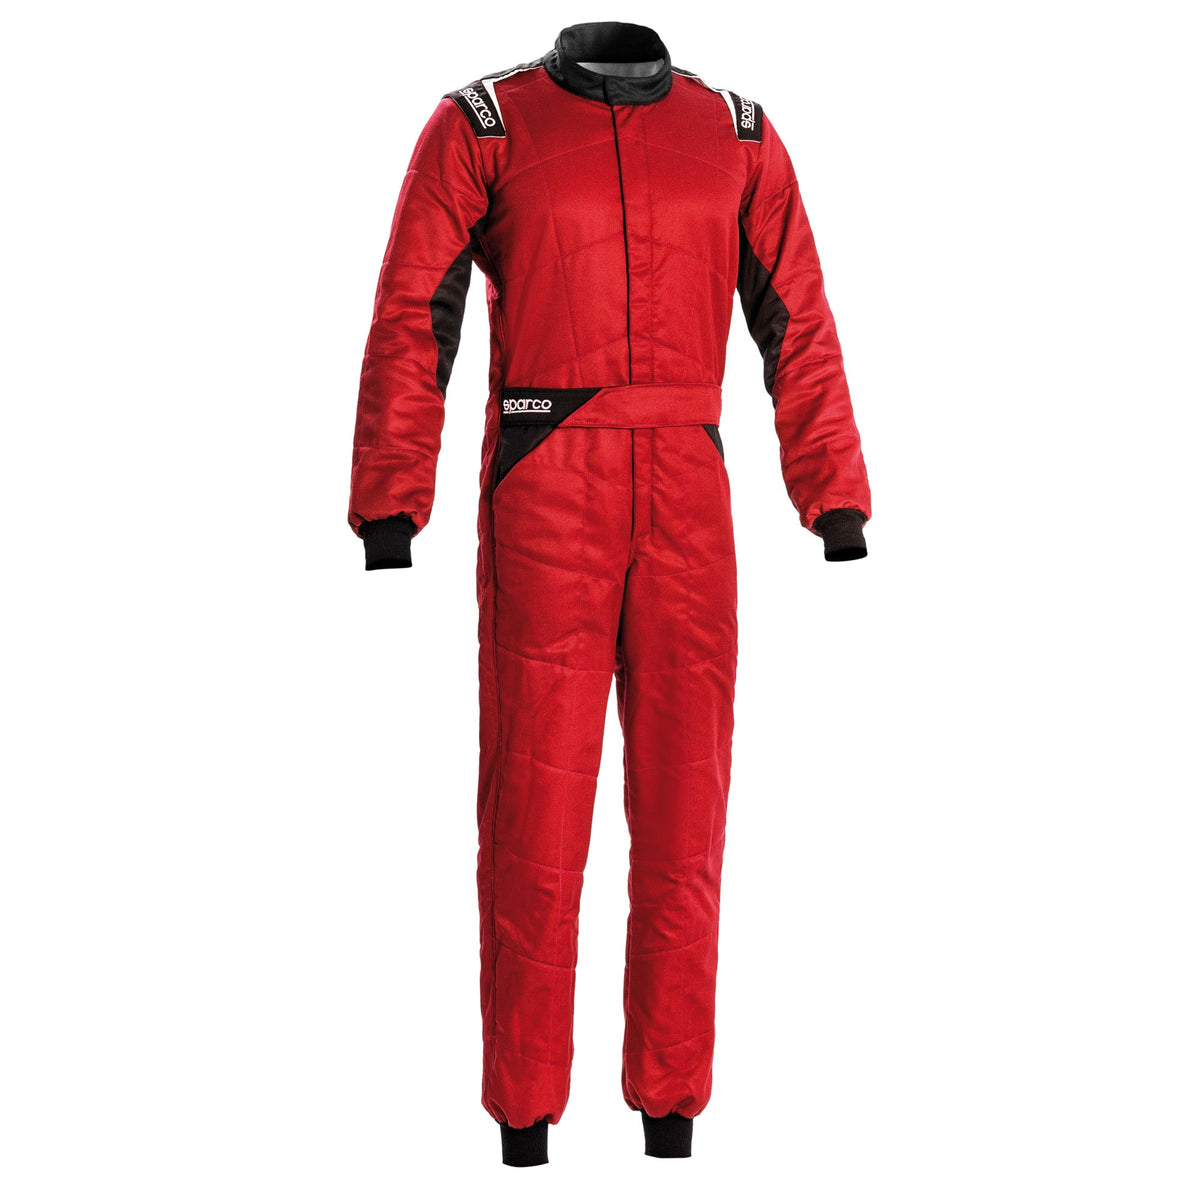 Sparco Sprint Racing Suit - Red/Black